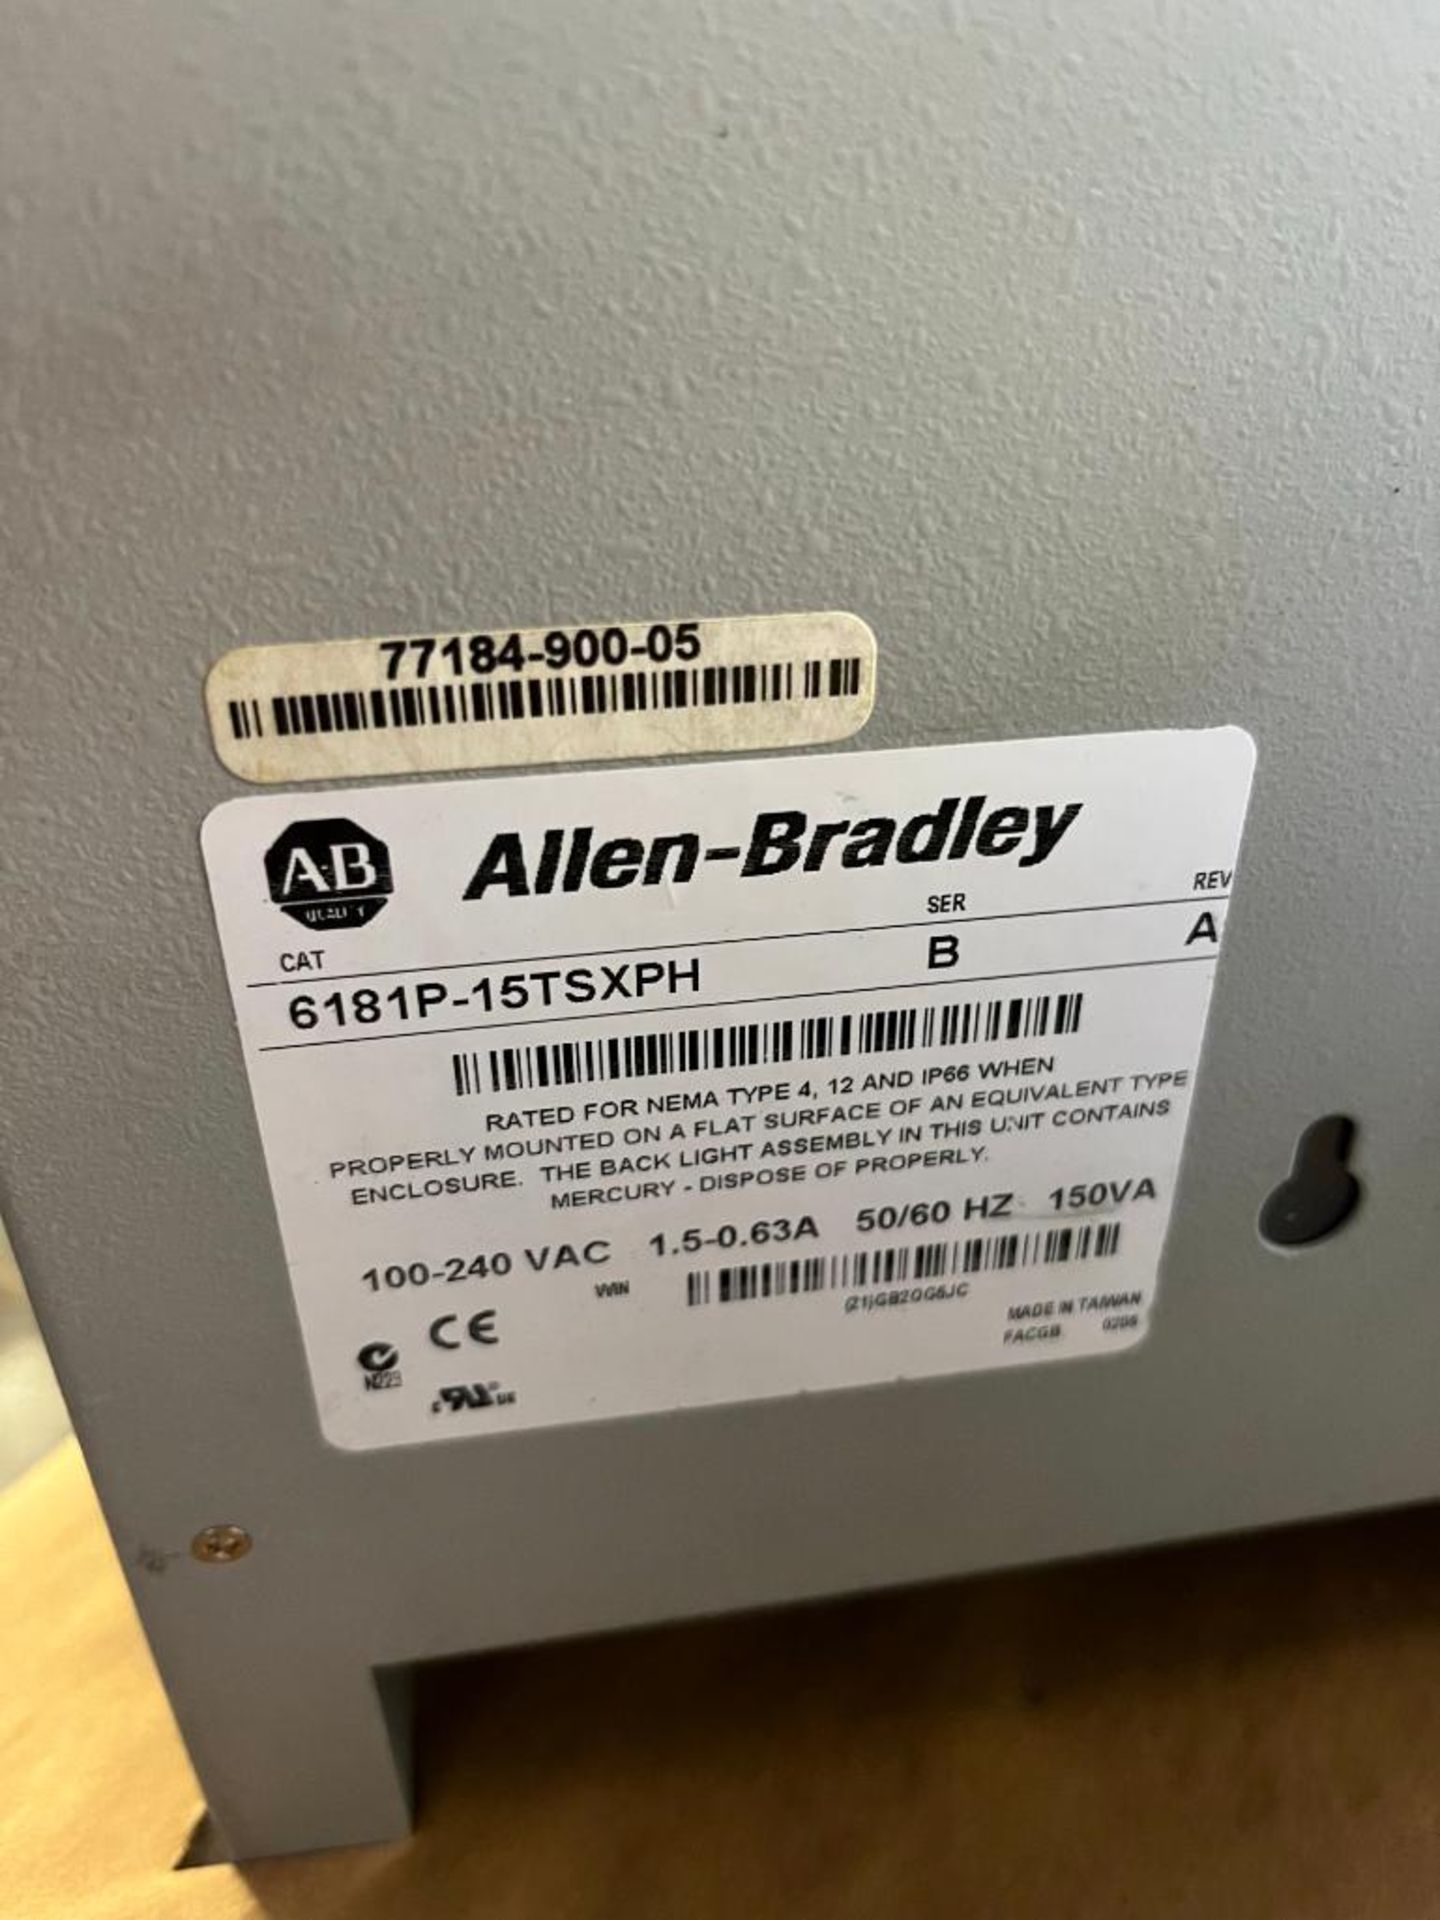 Allen-Bradley VersaView 1500P, Catalog Number 6181P-15TSXPH, Series B, 240 VAC - Image 3 of 3